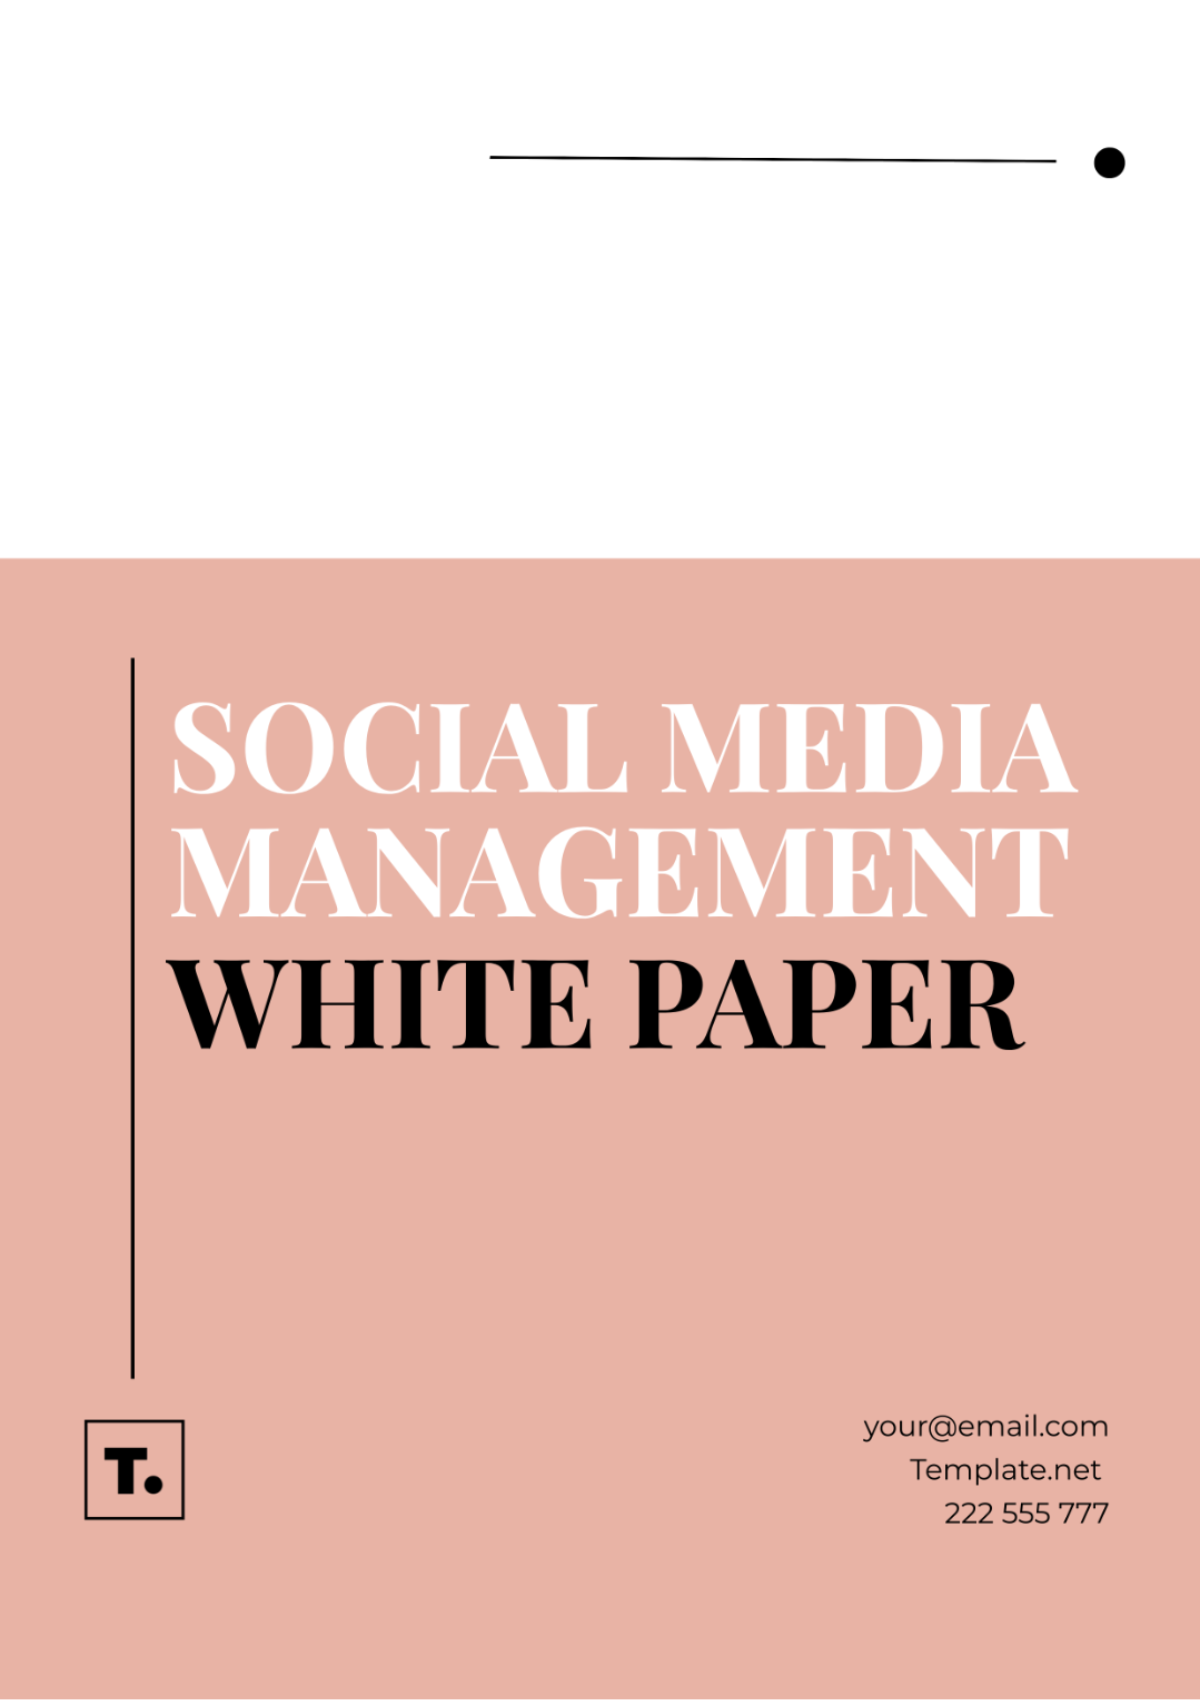 Social Media Management White Paper Template